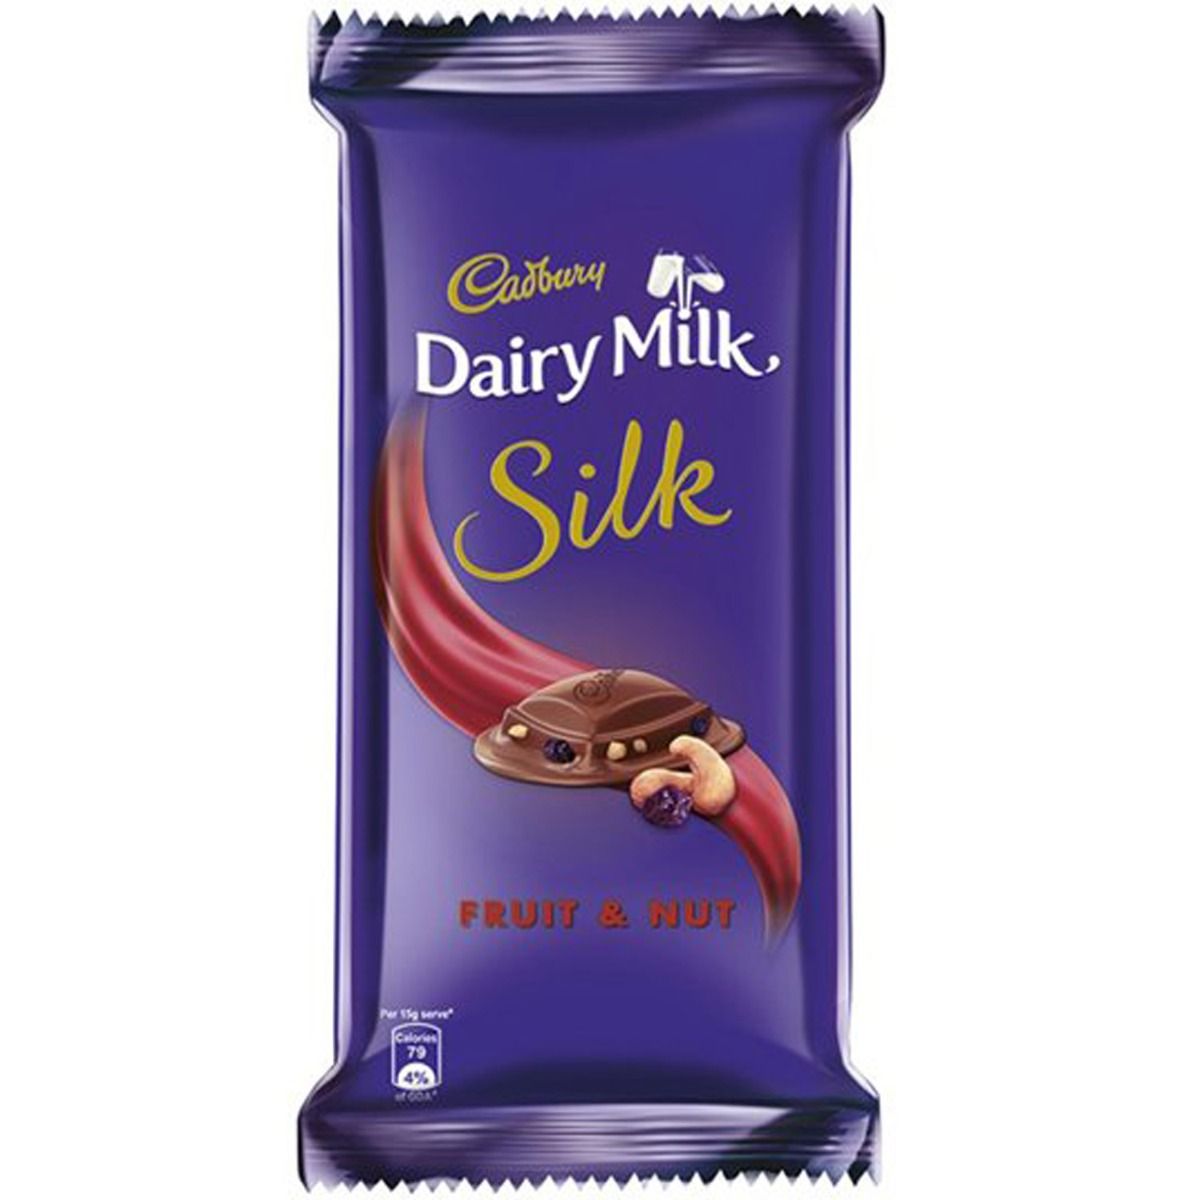 Buy Cadbury Dairy Milk Silk Fruit & Nut Chocolate Bar, 60 gm Online